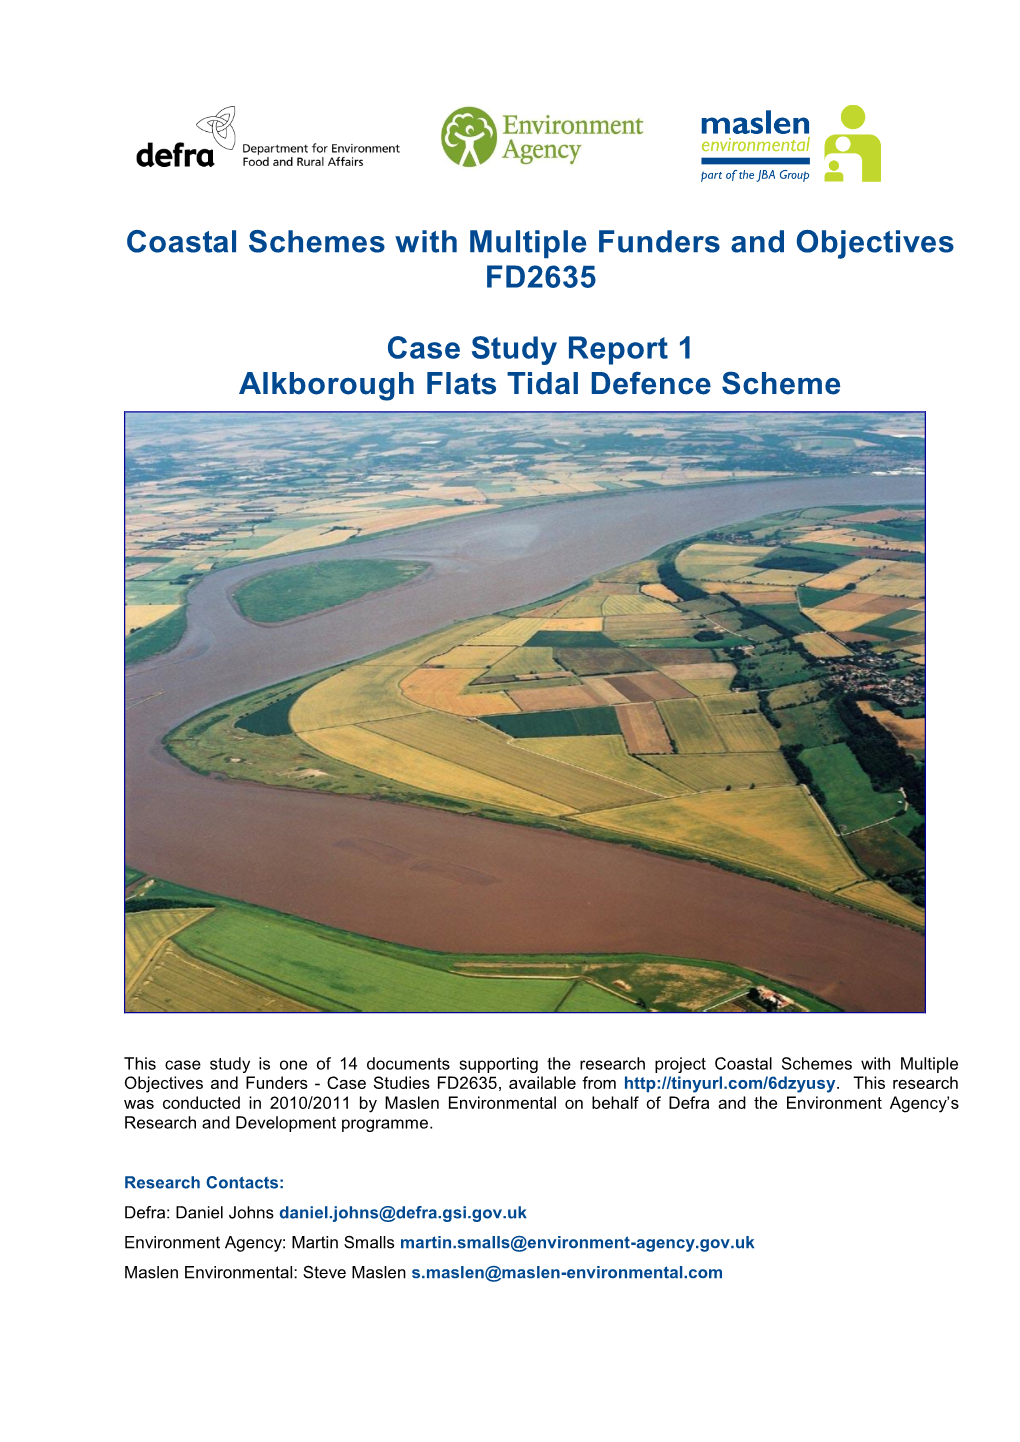 Case Study 1 Alkborough Flats Tidal Defence Scheme - FD2635.Doc 2